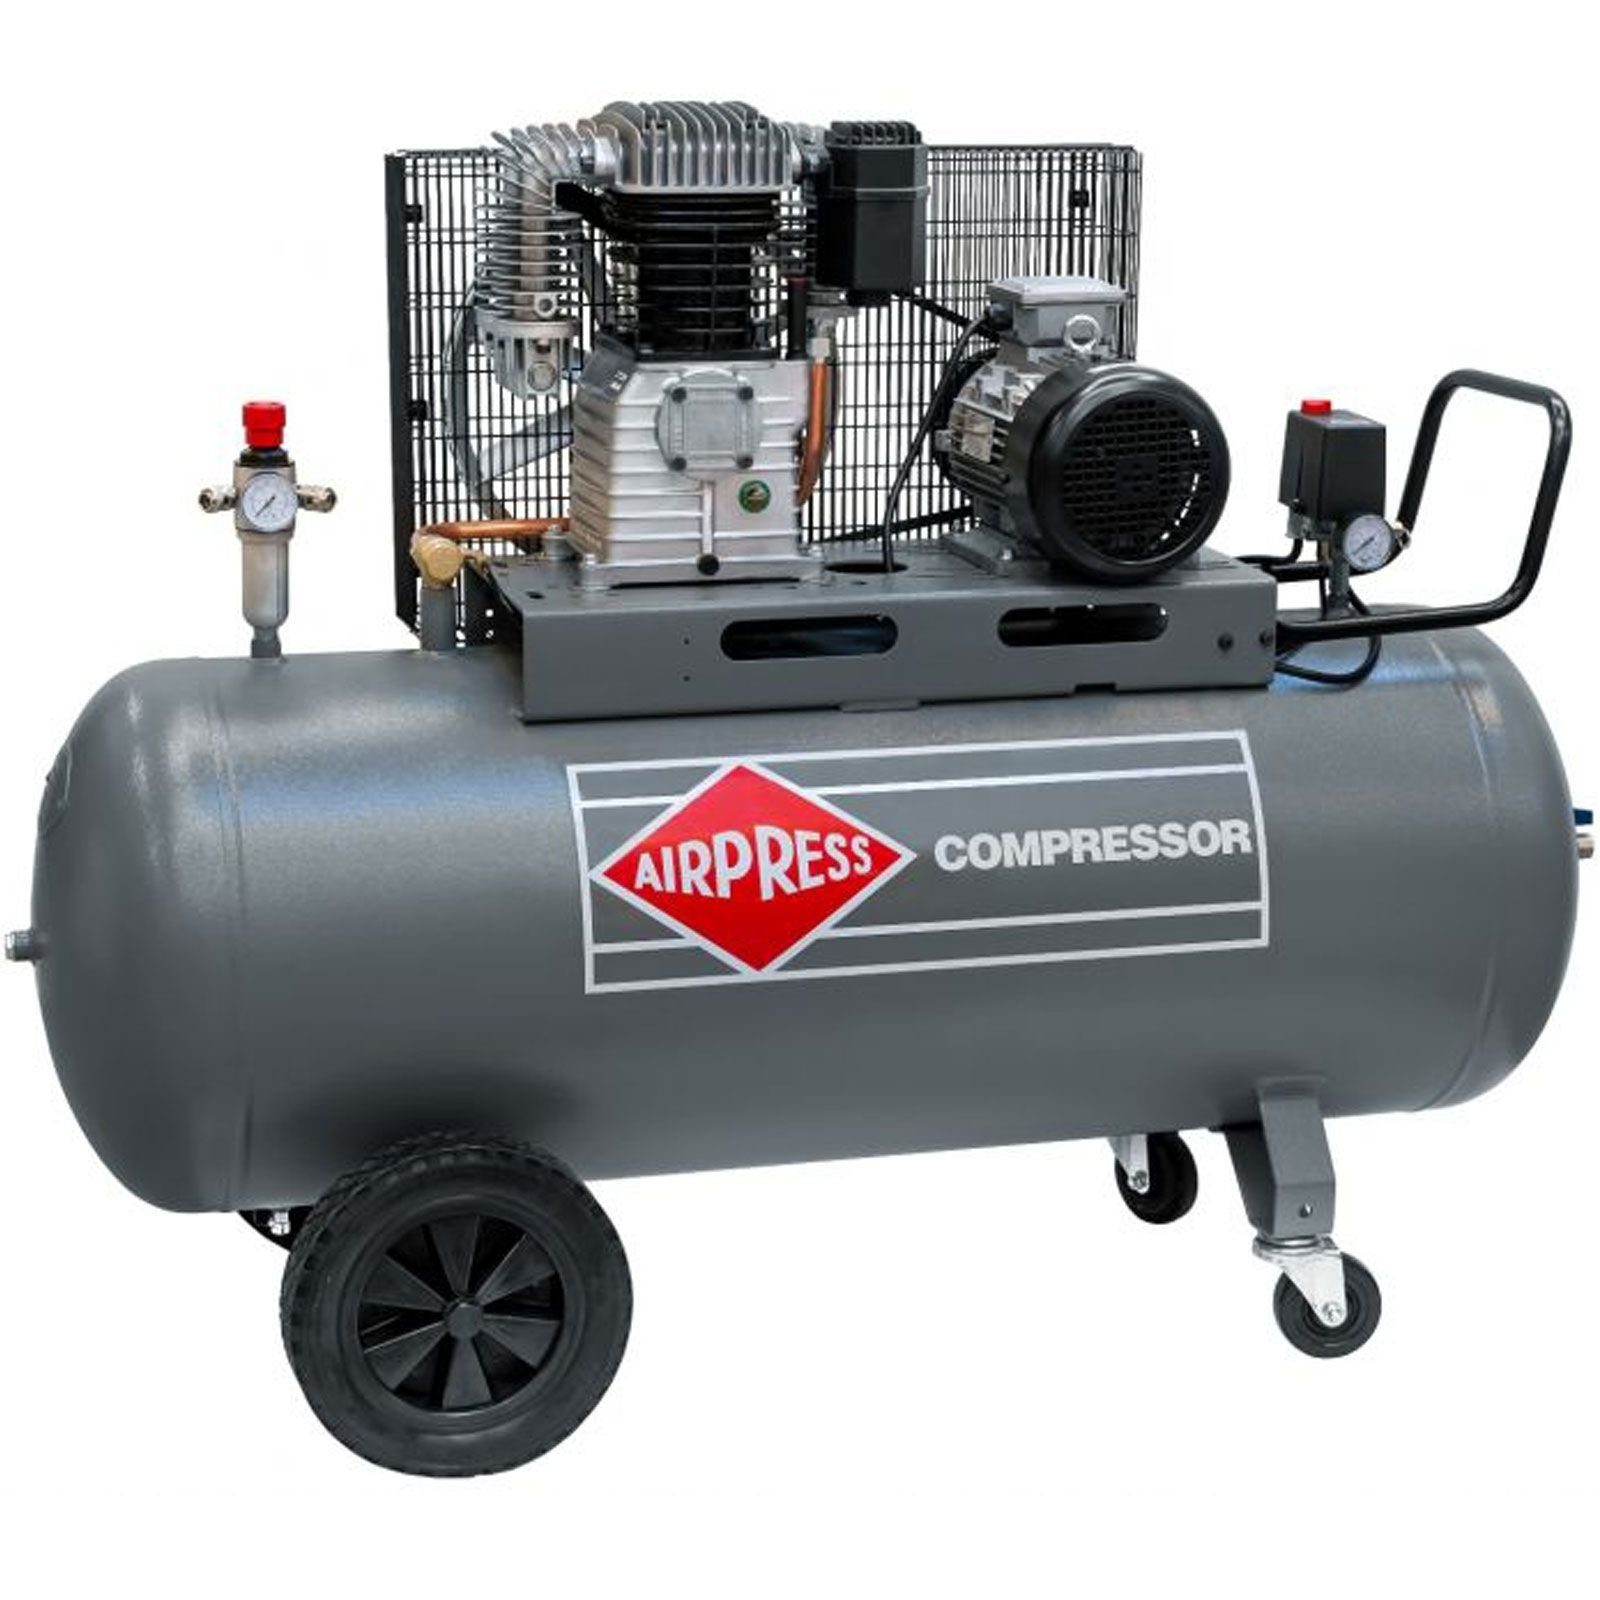 Airpress Kompressor Druckluft- Kompressor 5,5 PS 270 Liter 11 bar HK700-300 Typ 360568, max. 11 bar, 270 l, 1 Stück | Druckluftgeräte